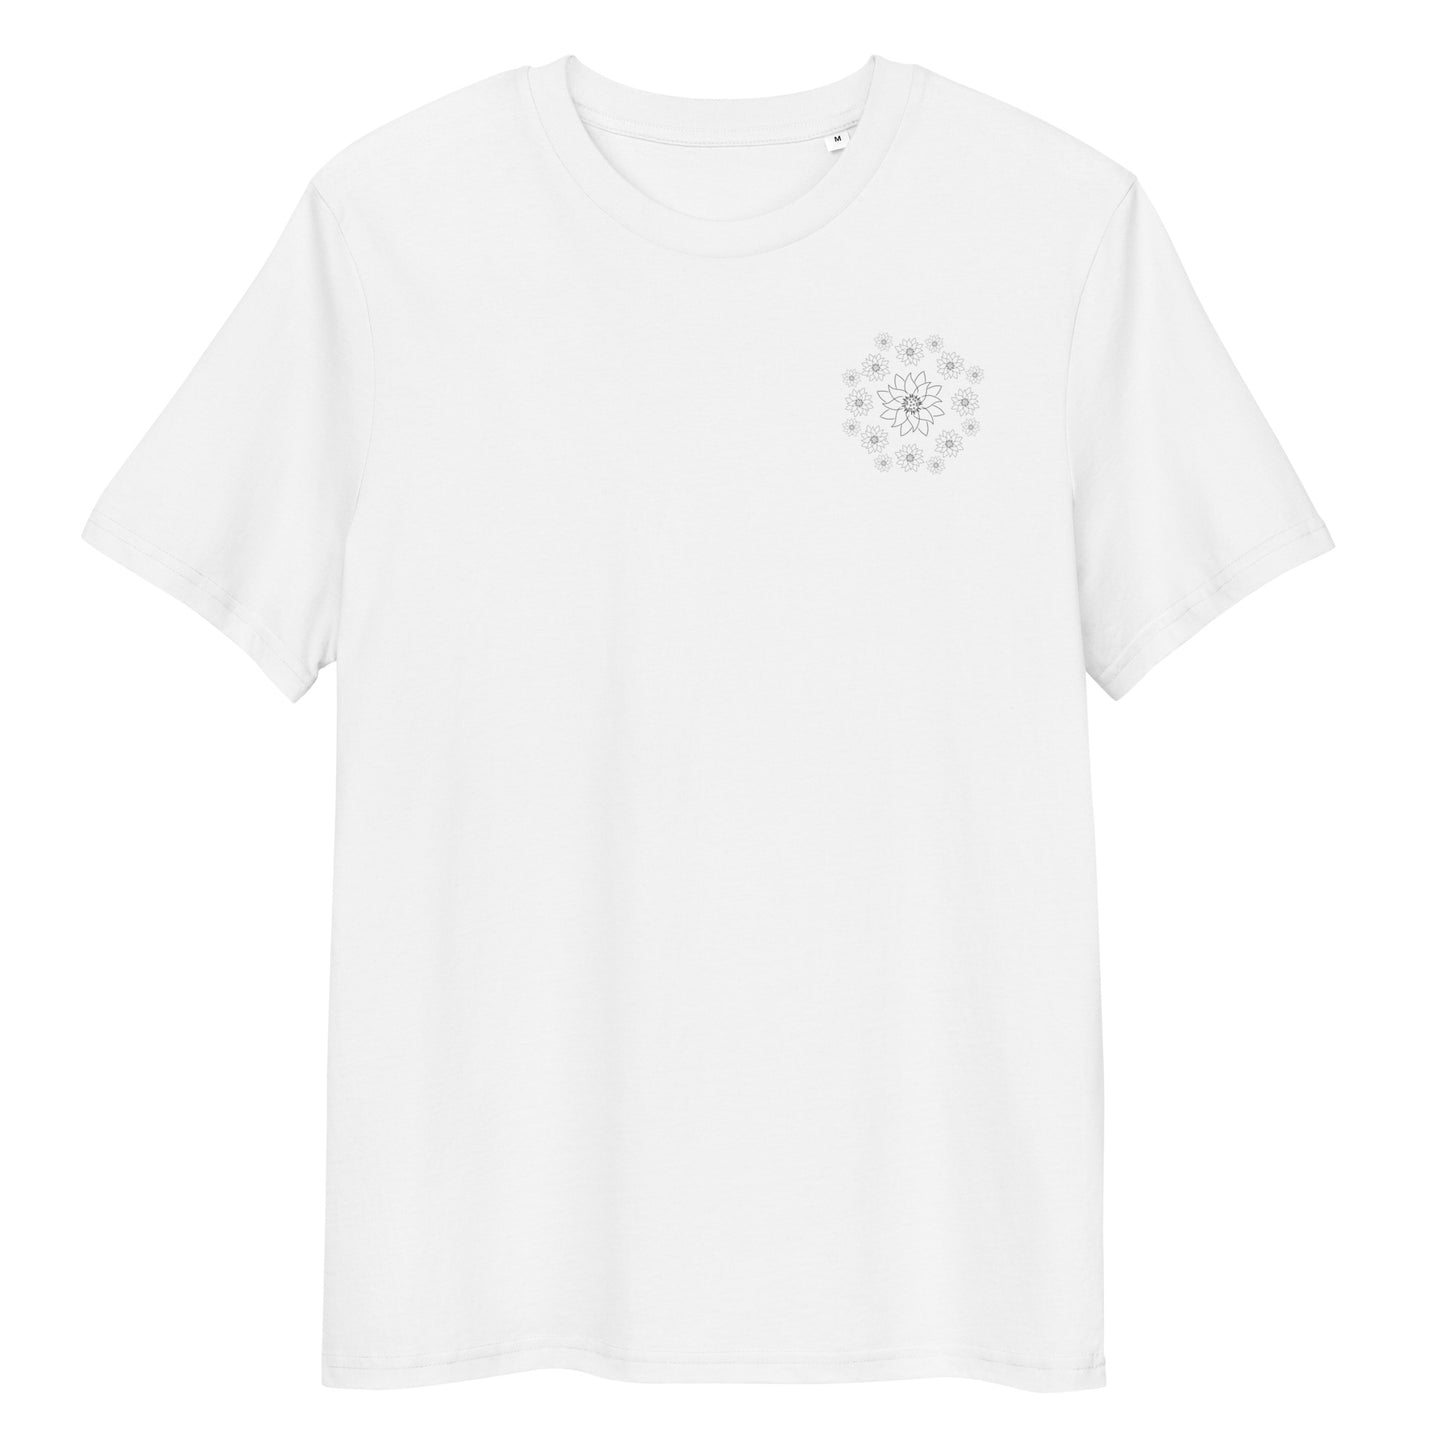 Lotus Dream | 100% Organic Cotton T Shirt in white